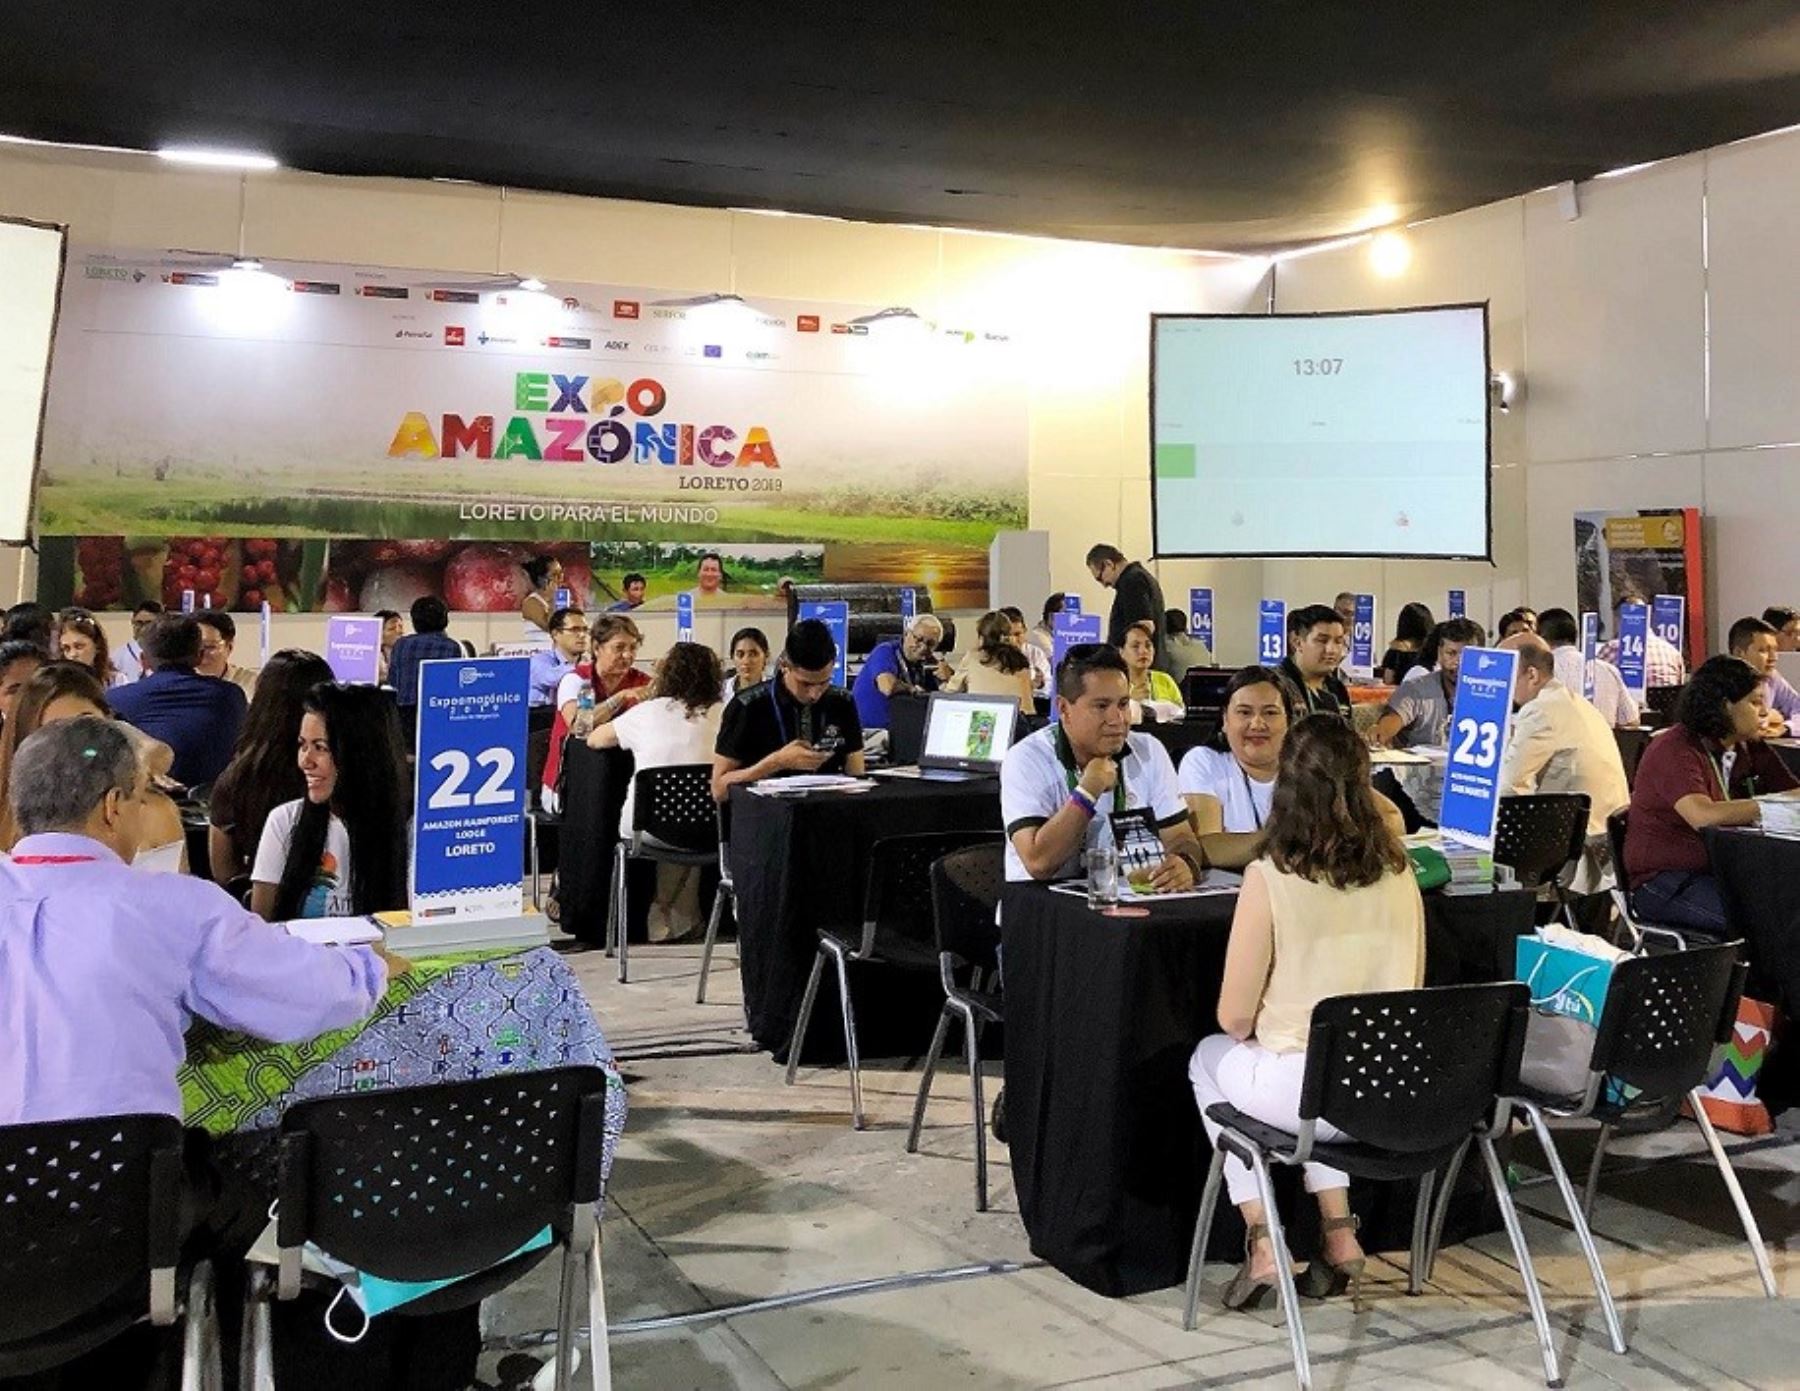 Loreto proyecta recibir 70,000 visitantes con ocasión de la Expoamazónica 2019